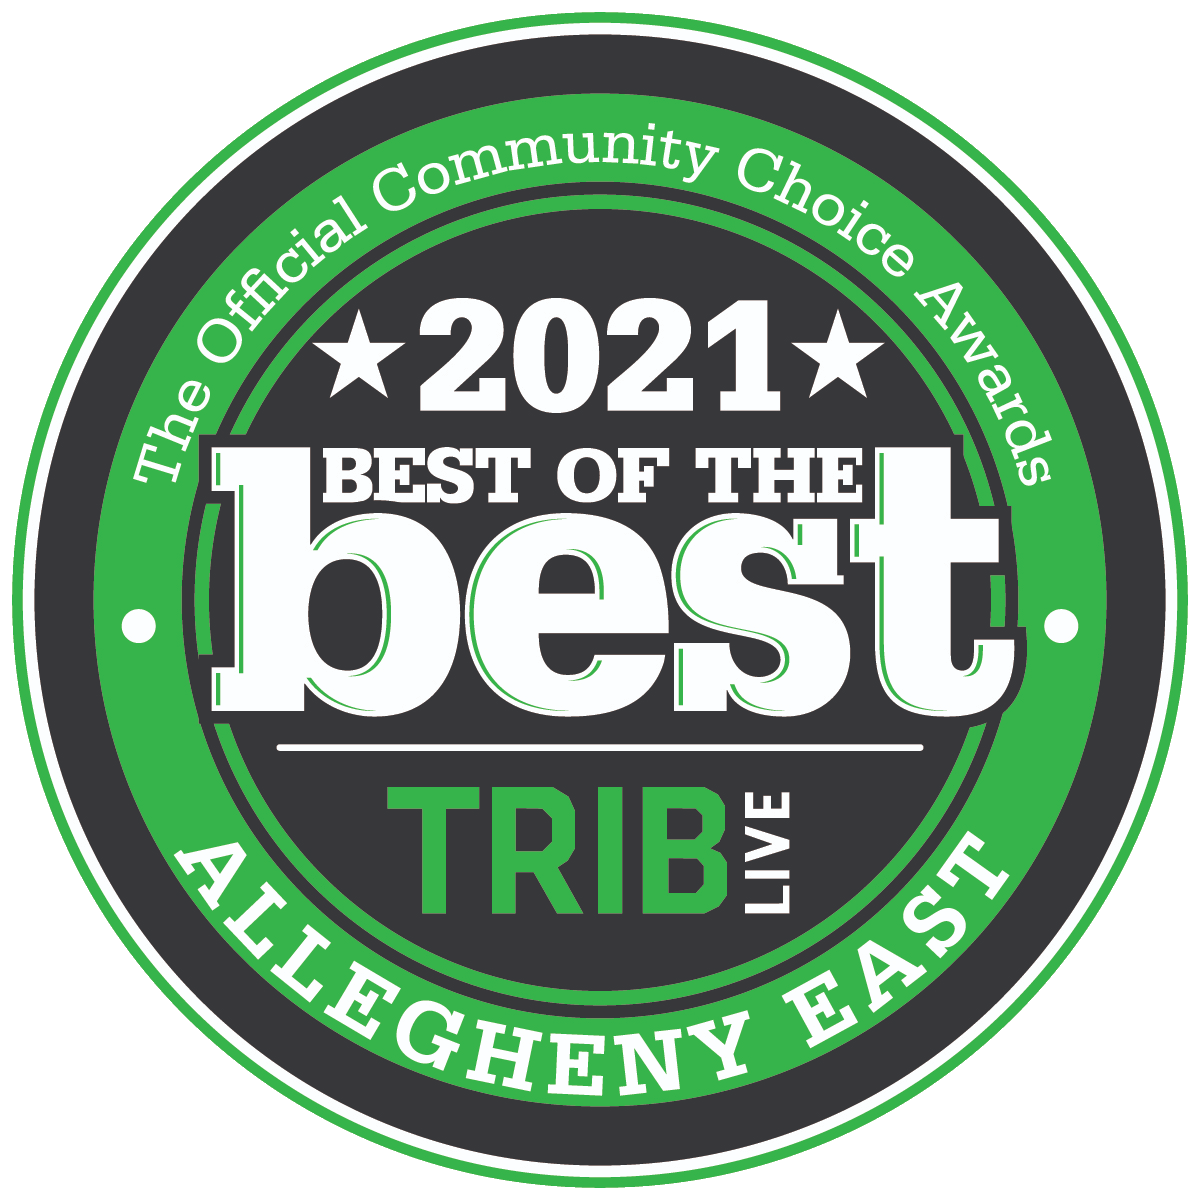 Tribune Review Community Choice Award Nomination 2021